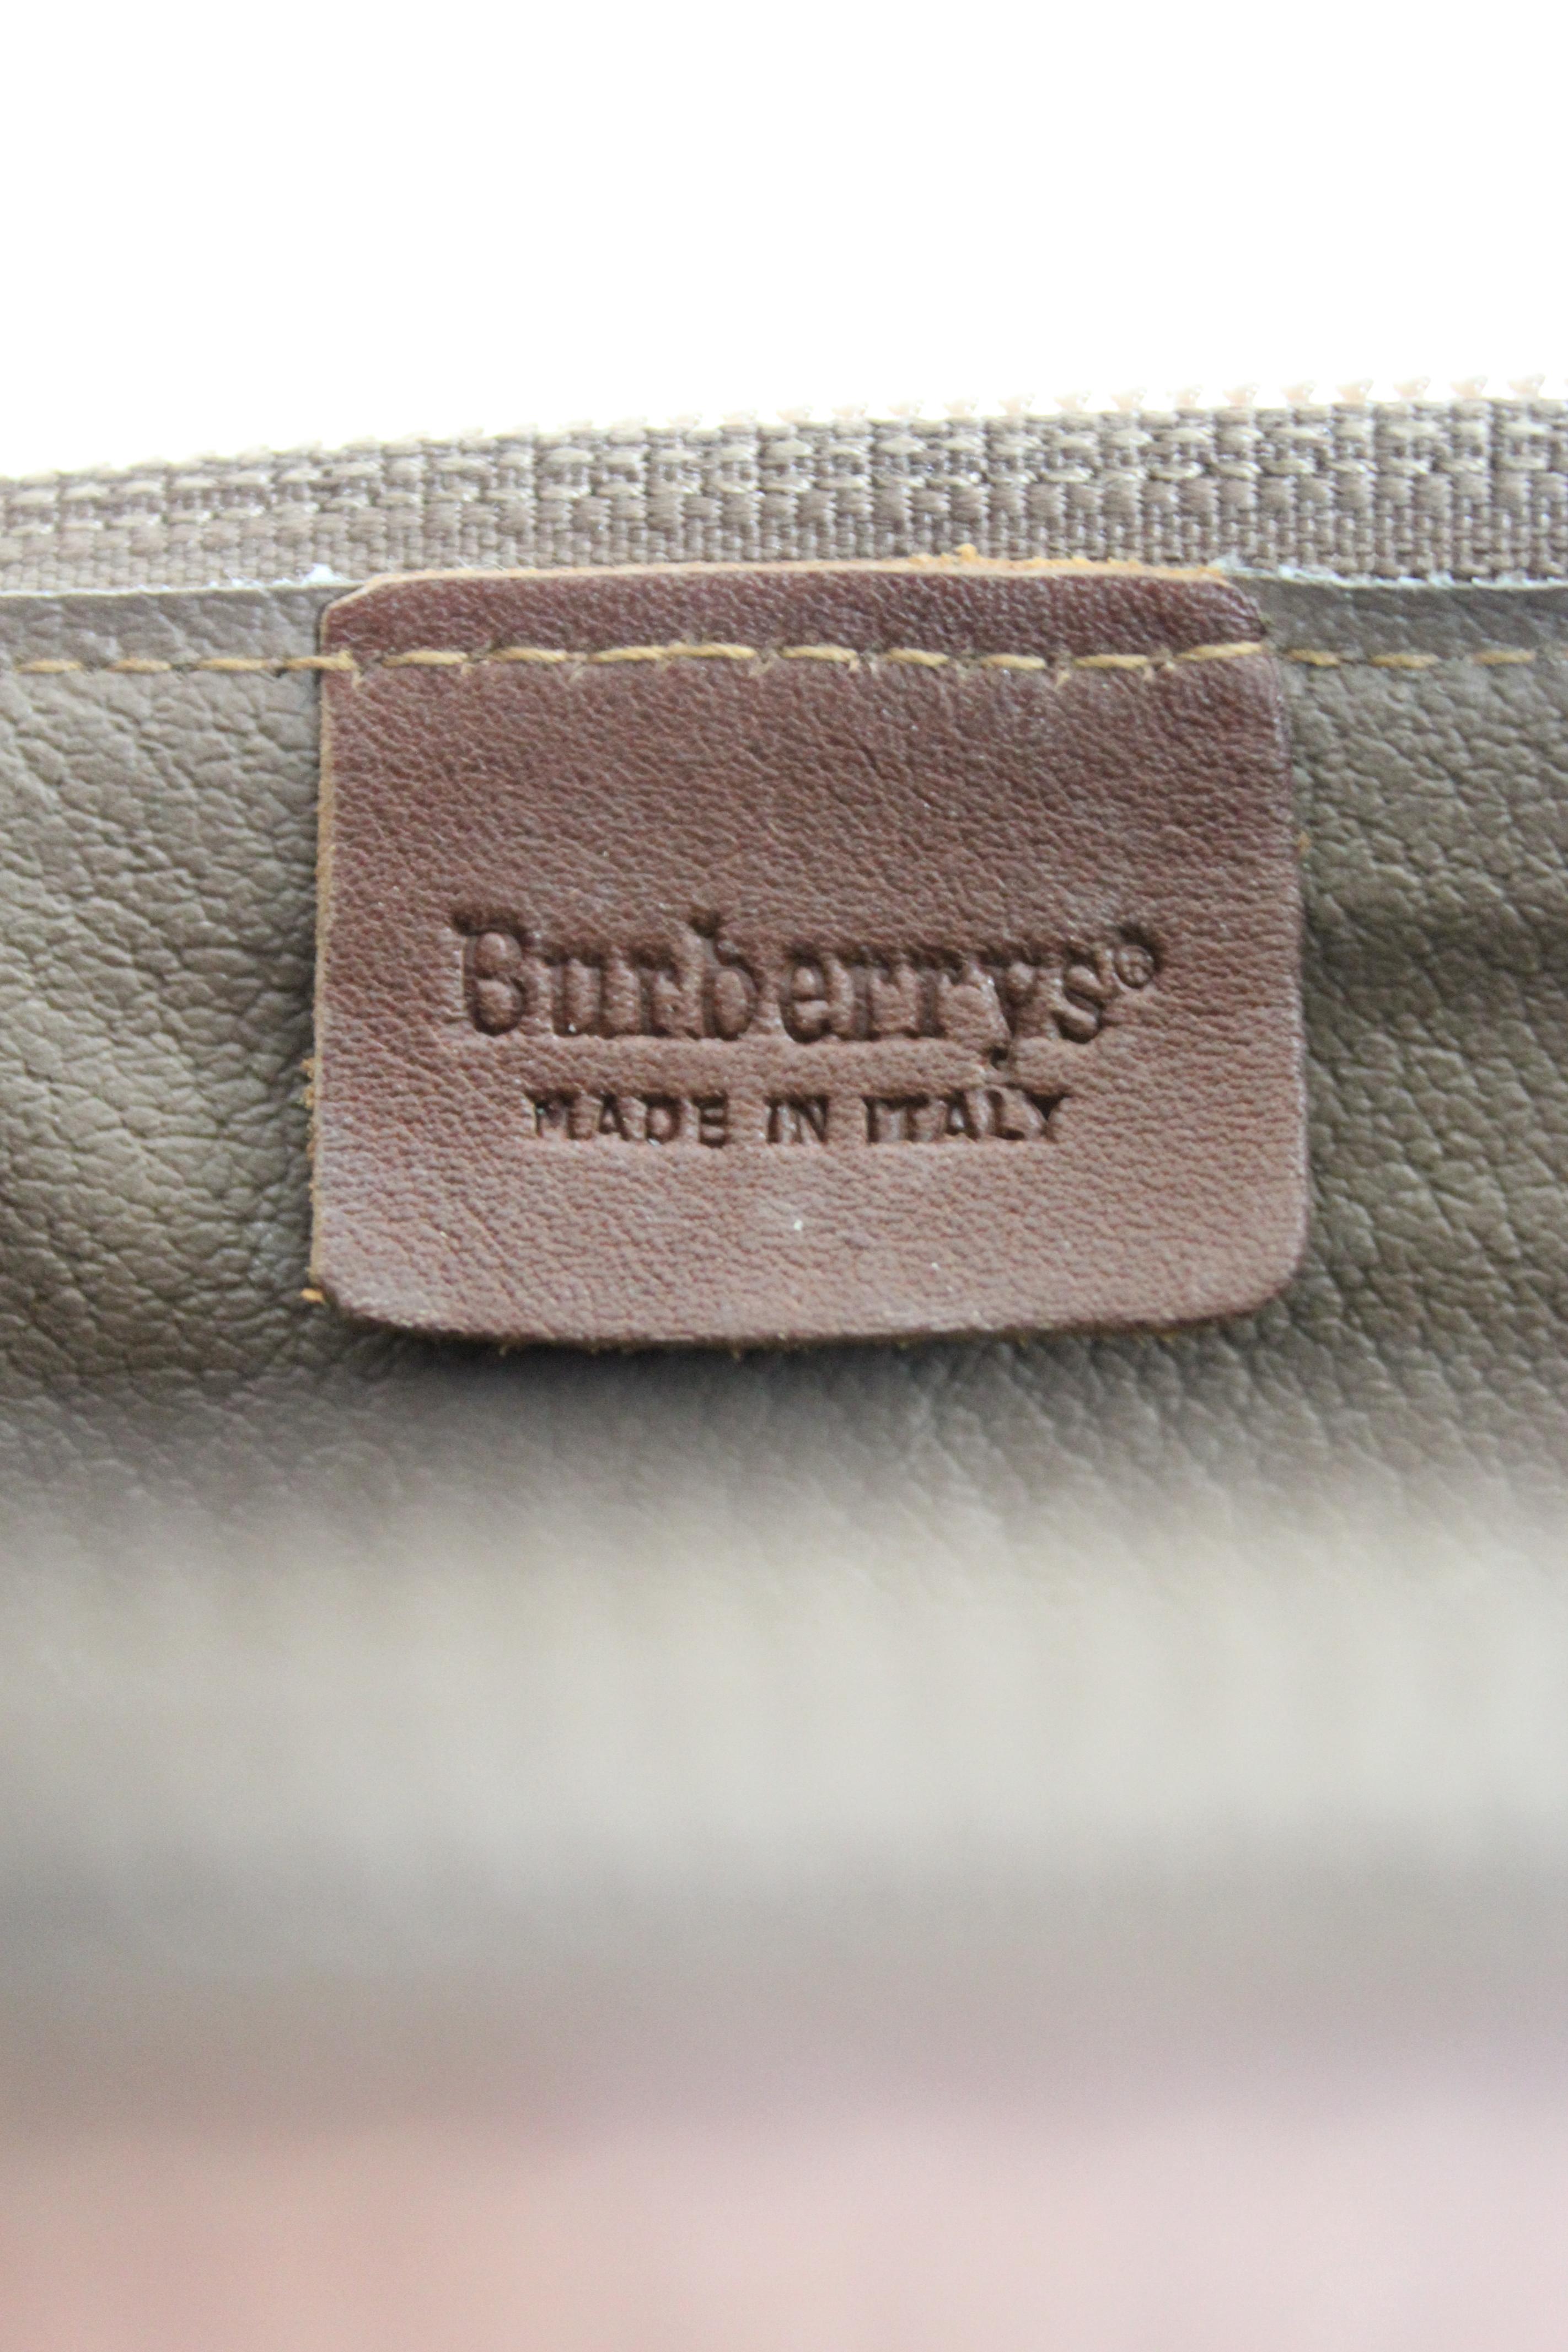 Burberry Beige Leather Canvas Tartan Travel Clutch Bag 3